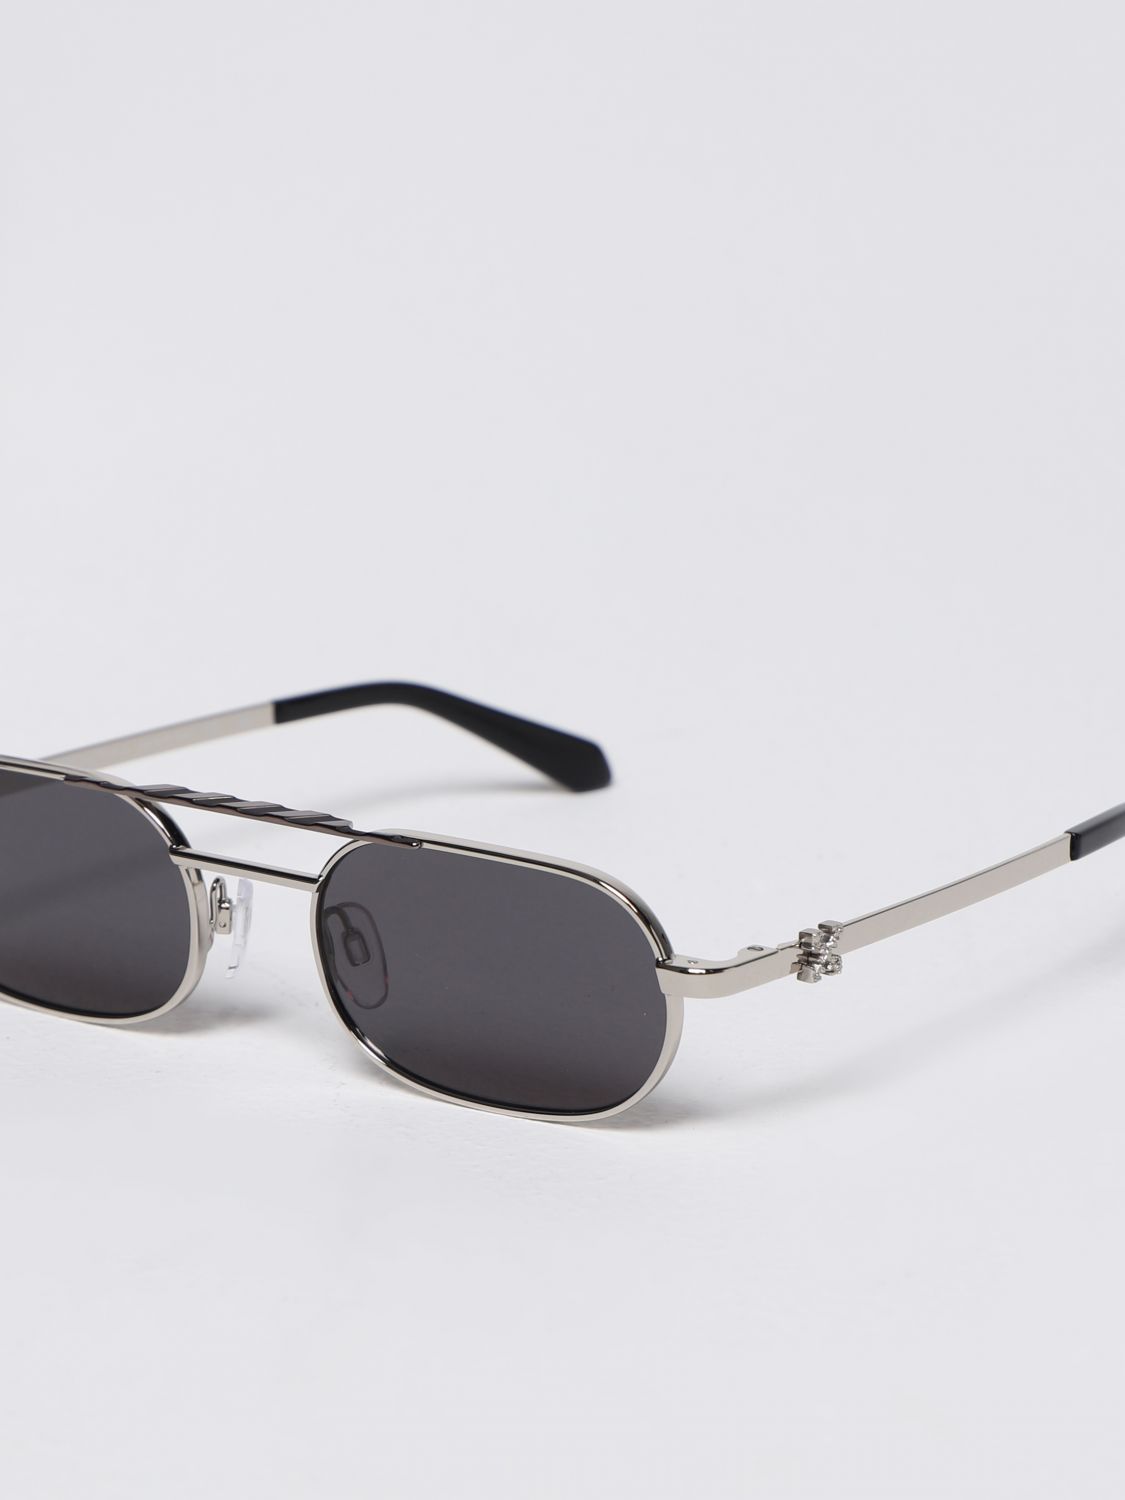 OFF-WHITE: Baltimore metal sunglasses - Grey  Off-White sunglasses  OERI072S23MET001 online at